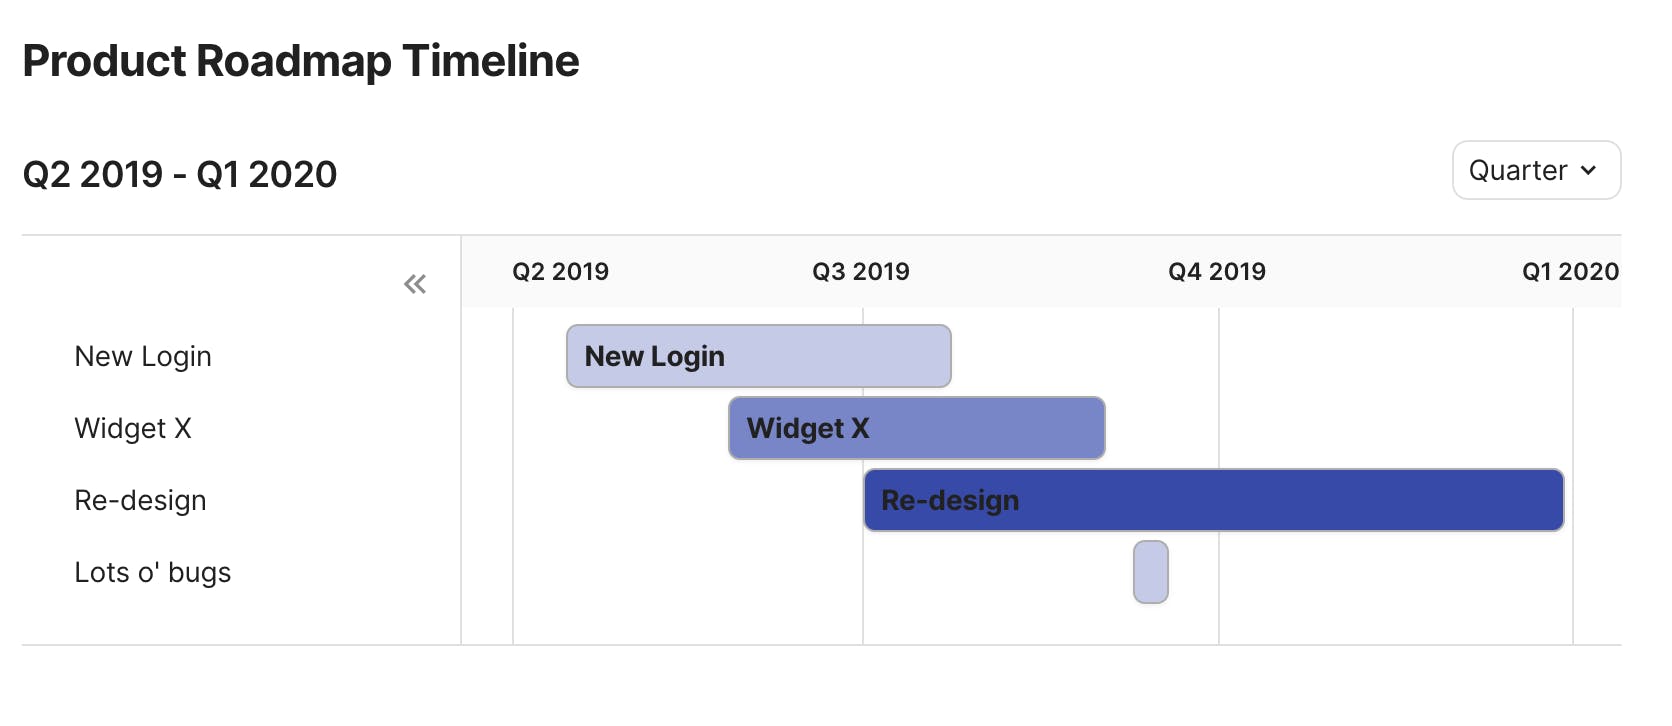 product roadmap in a timeline chart in Coda